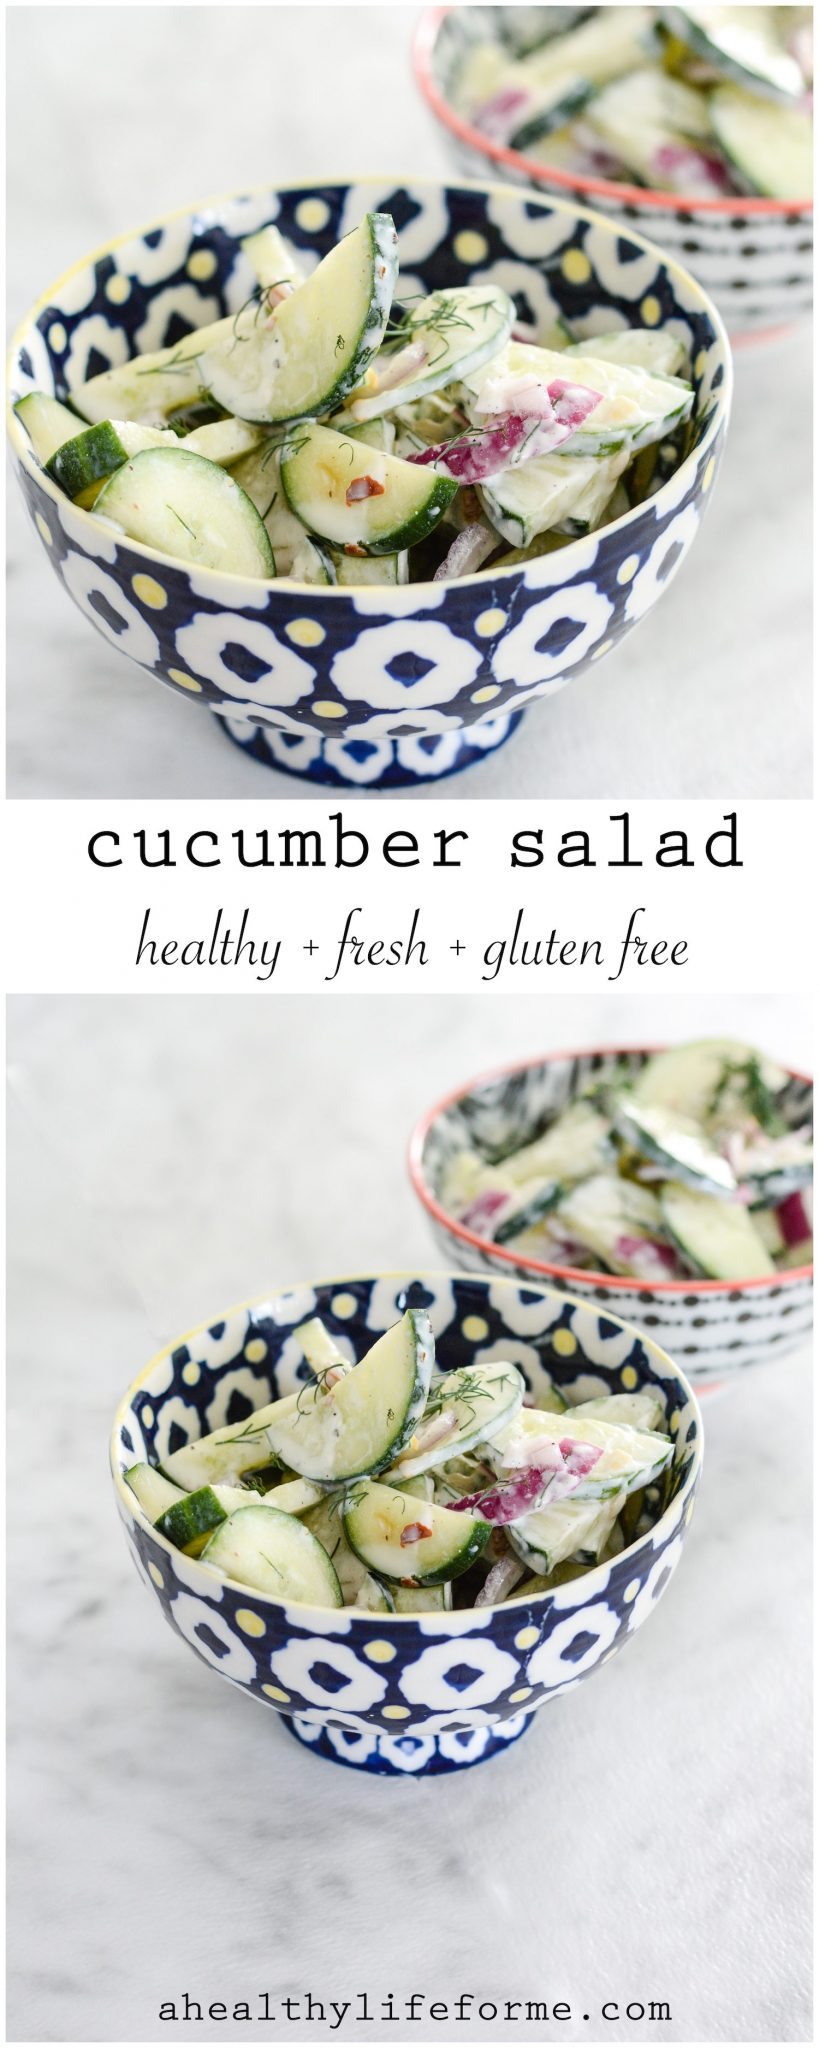 Cucumber Salad Recipe | ahealthylifeforme.com